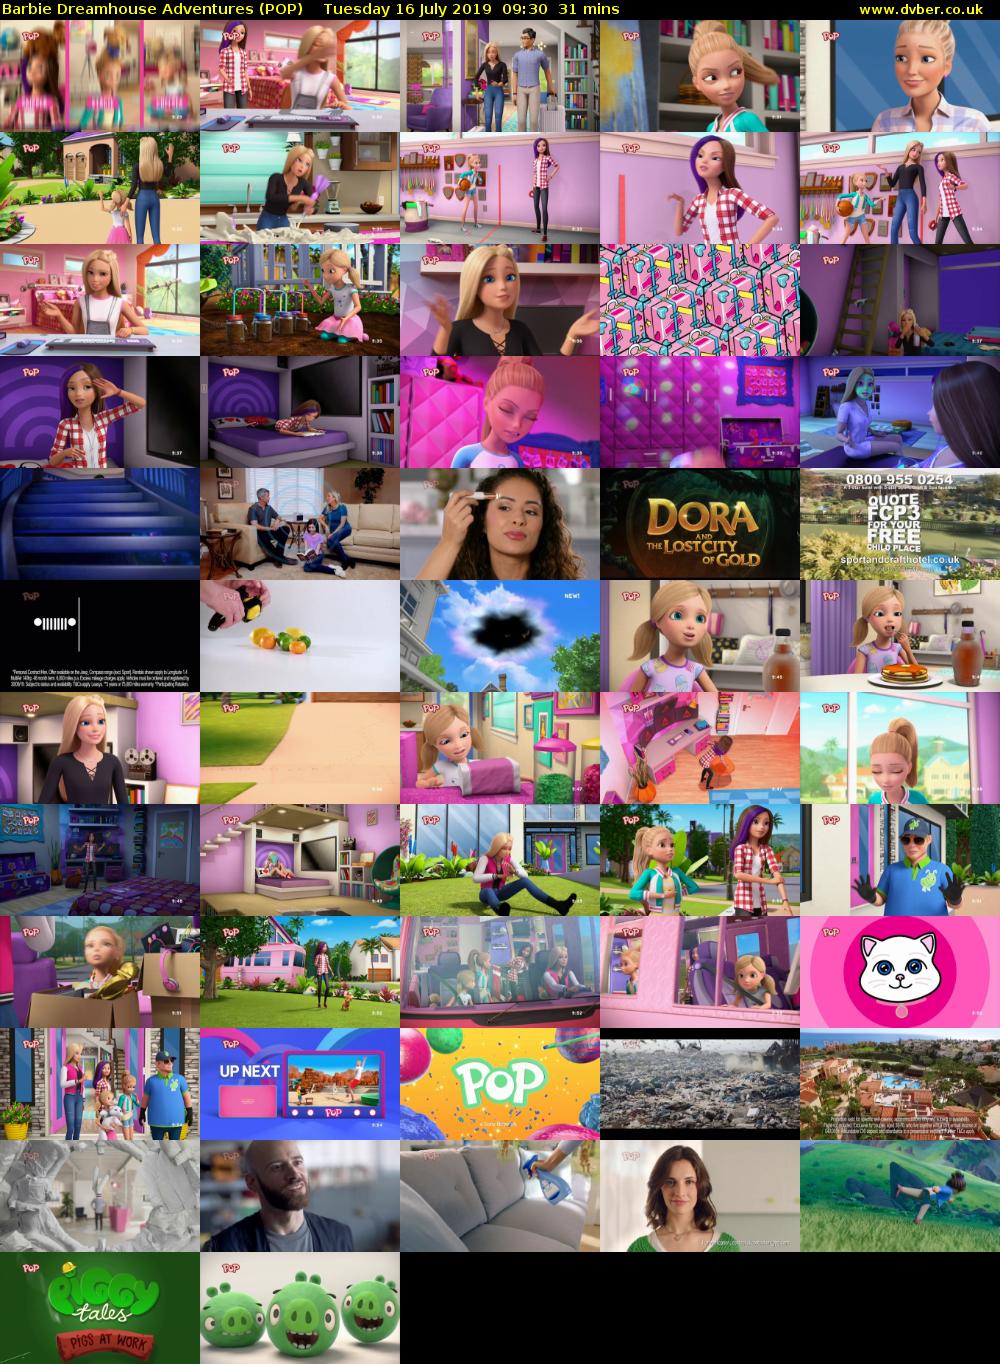 Barbie Dreamhouse Adventures (POP) Tuesday 16 July 2019 09:30 - 10:01